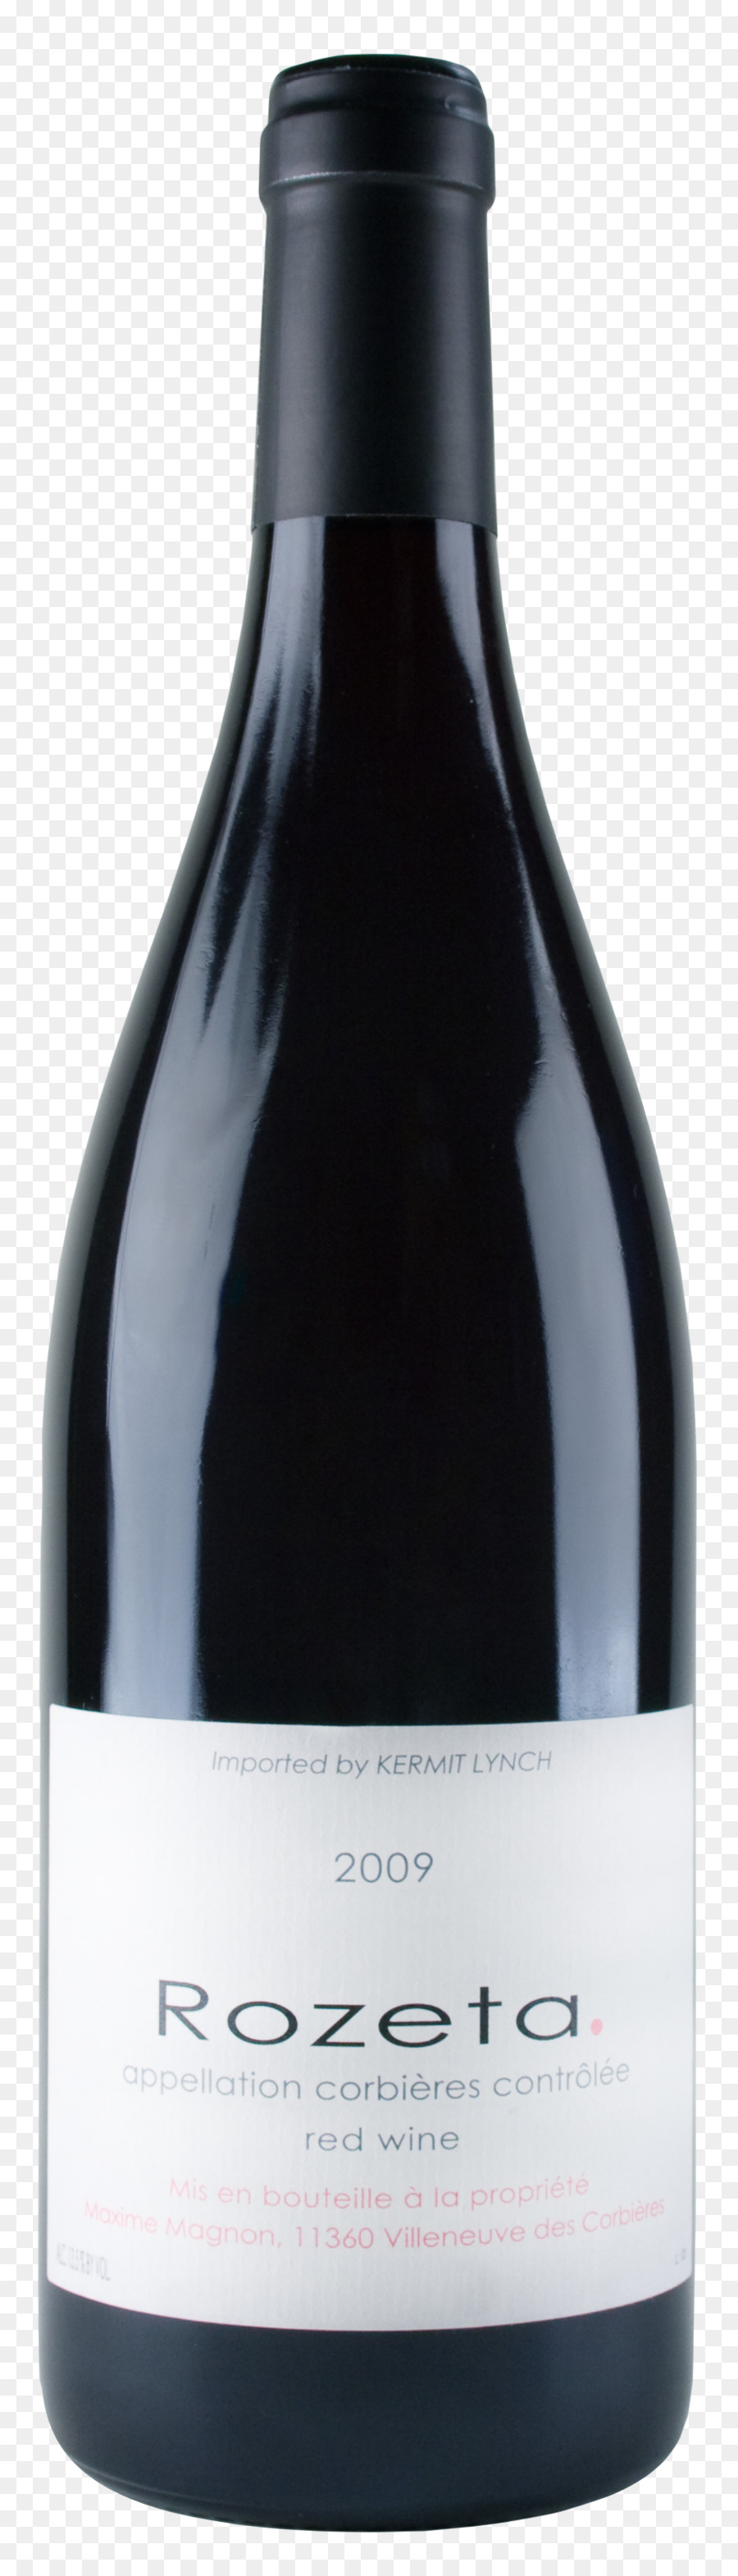 Vinho，Pinot Noir PNG